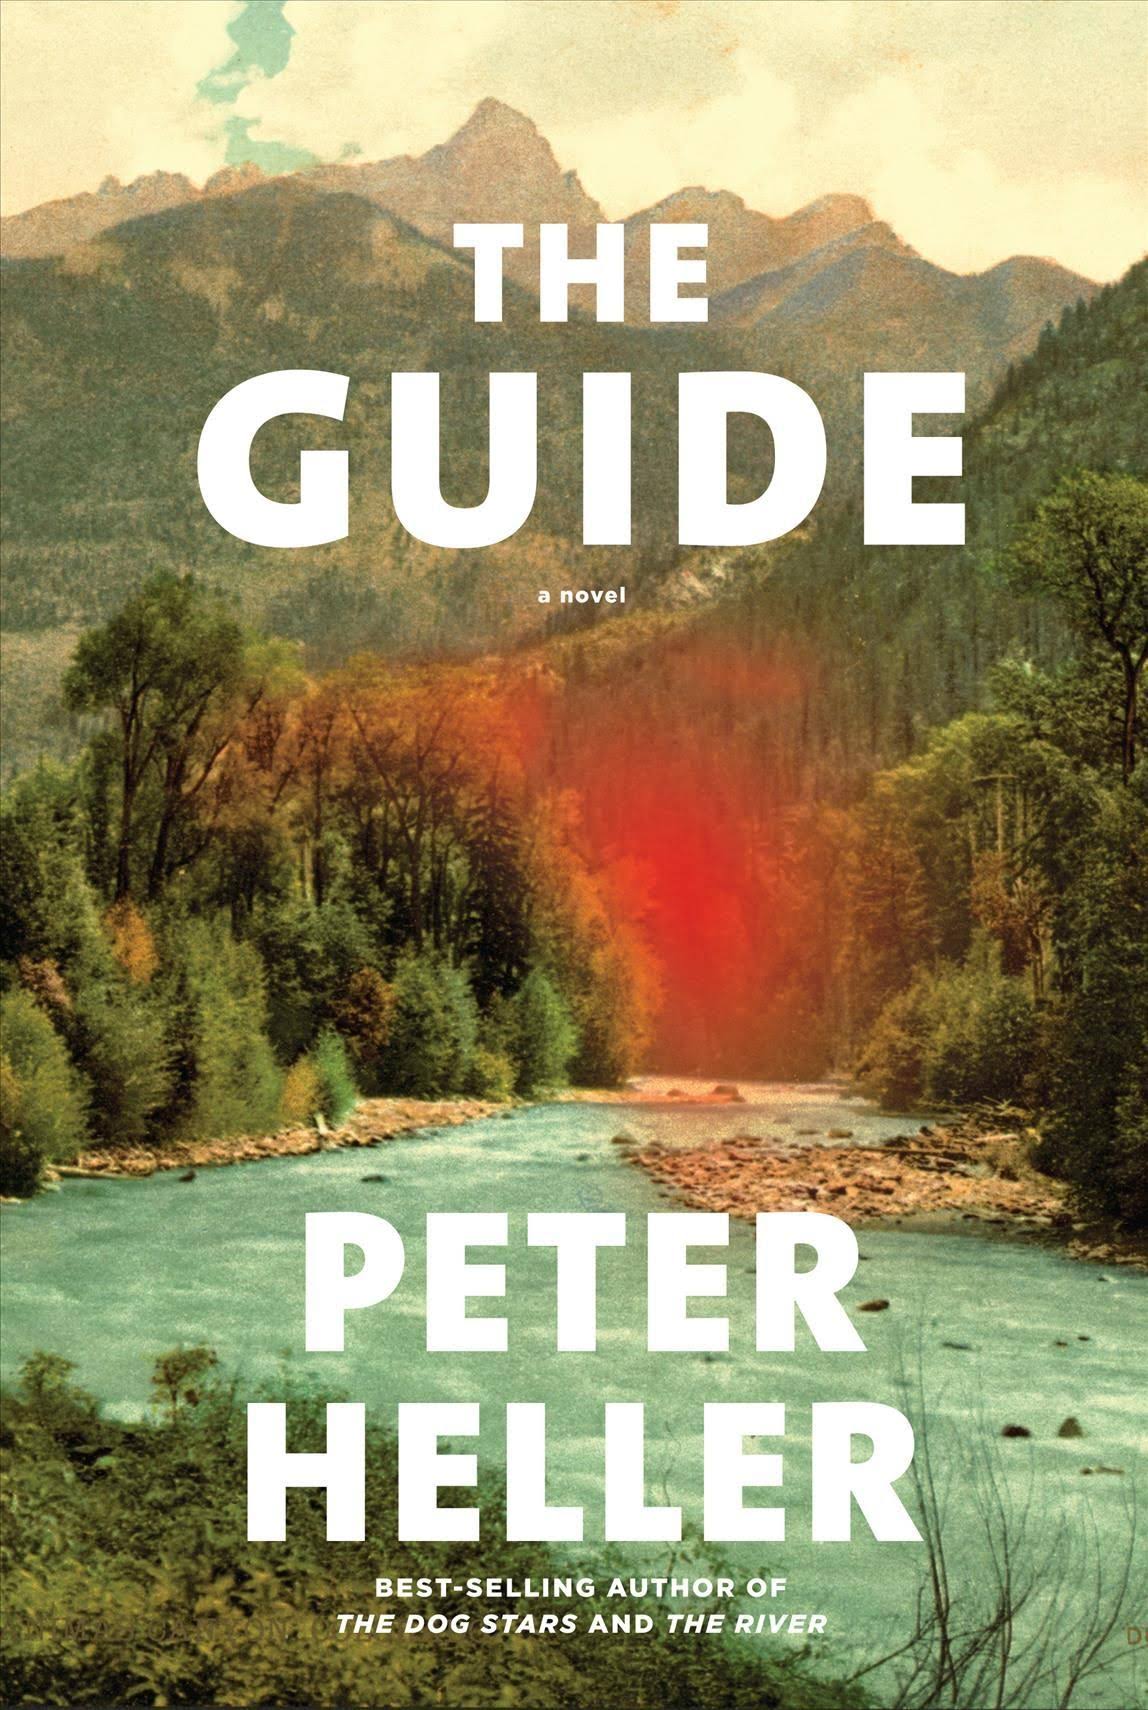 The Guide: A Novel [Book]